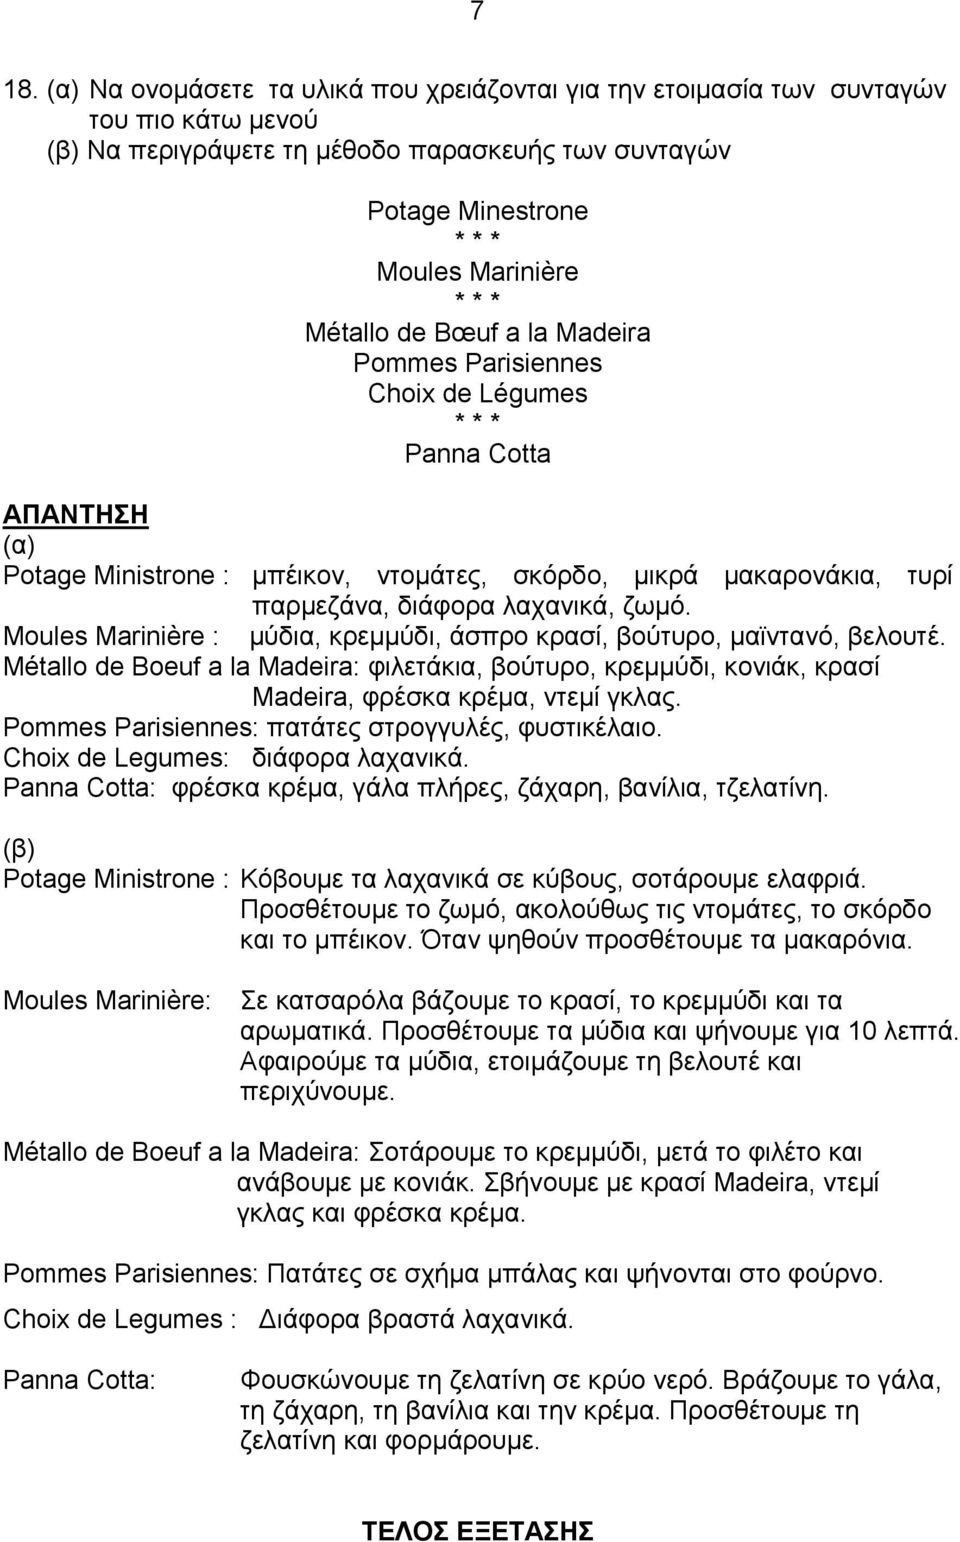 Mοules Marinière : μύδια, κρεμμύδι, άσπρο κρασί, βούτυρο, μαϊντανό, βελουτέ. Métallo de Boeuf a la Madeira: φιλετάκια, βούτυρο, κρεμμύδι, κονιάκ, κρασί Madeira, φρέσκα κρέμα, ντεμί γκλας.